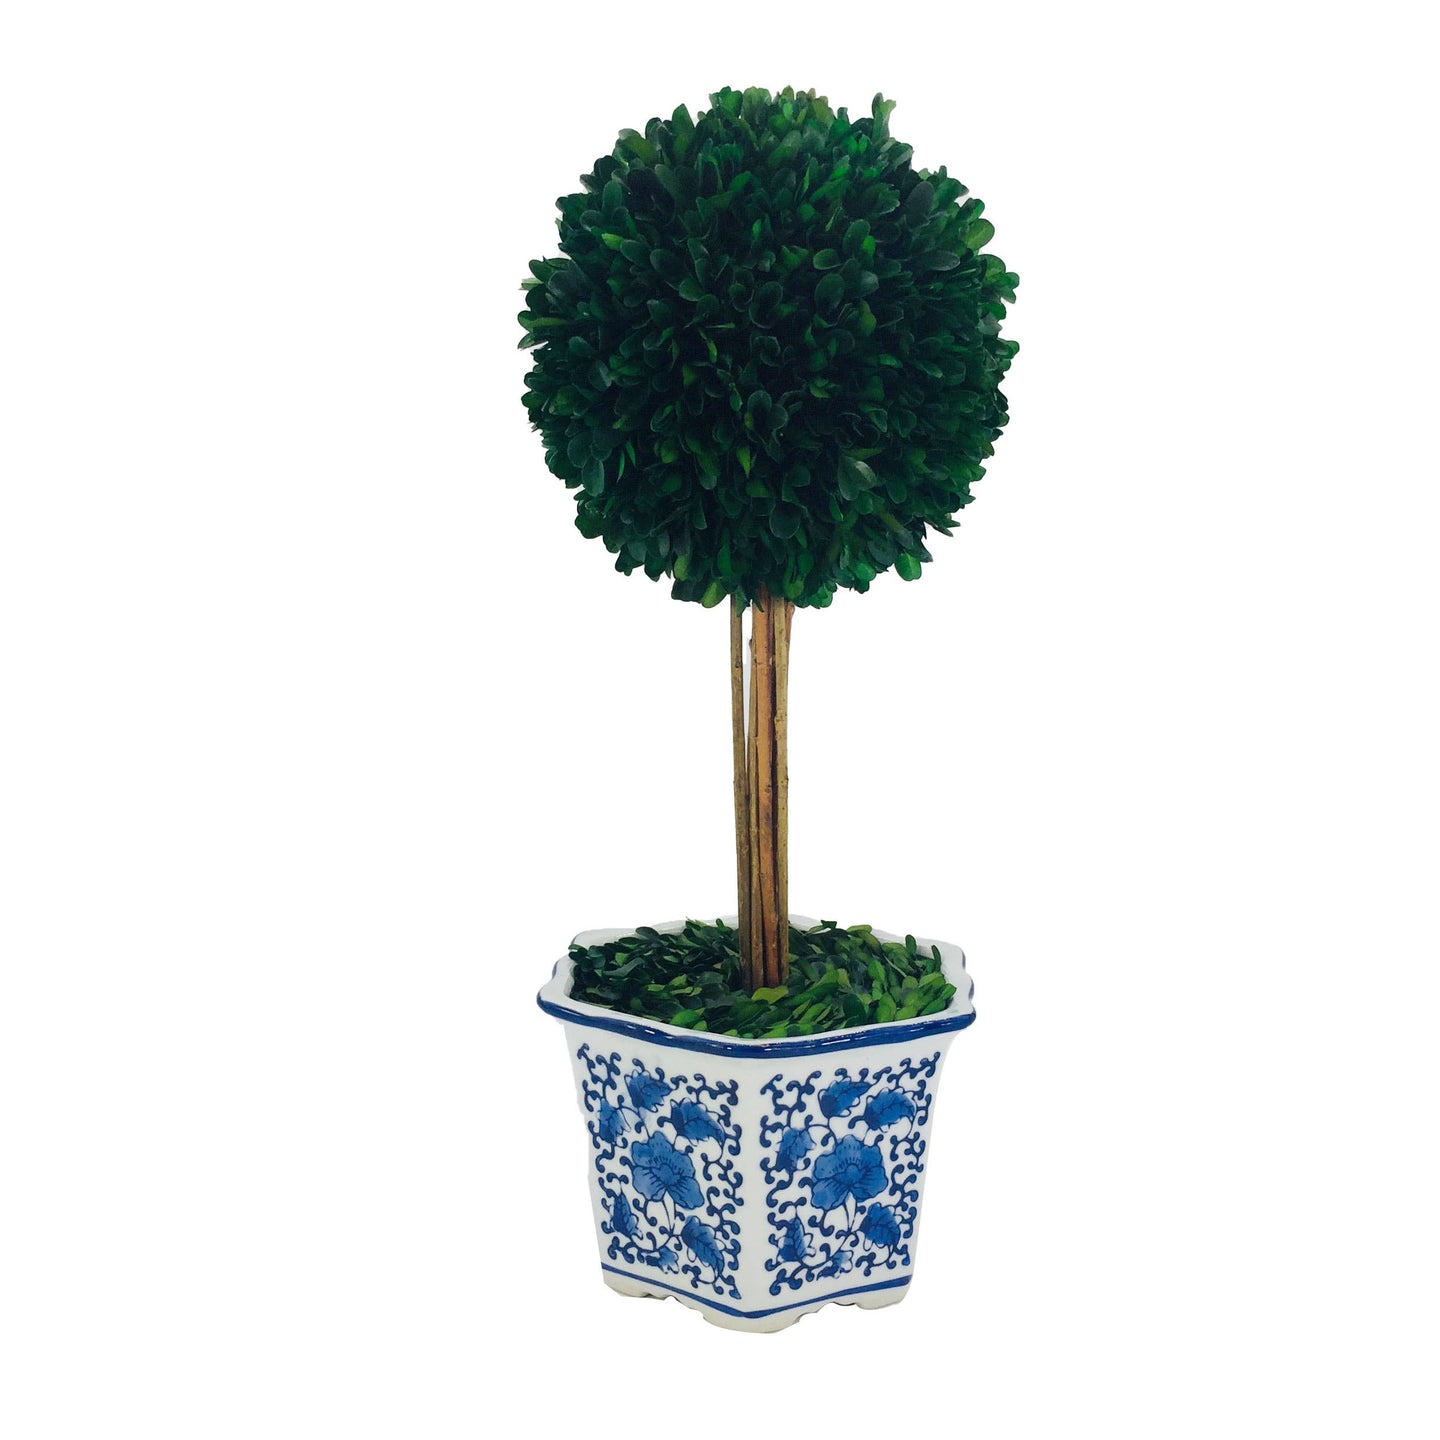 Boxwood Ball Topiary Tree in Ceramic Pot Large